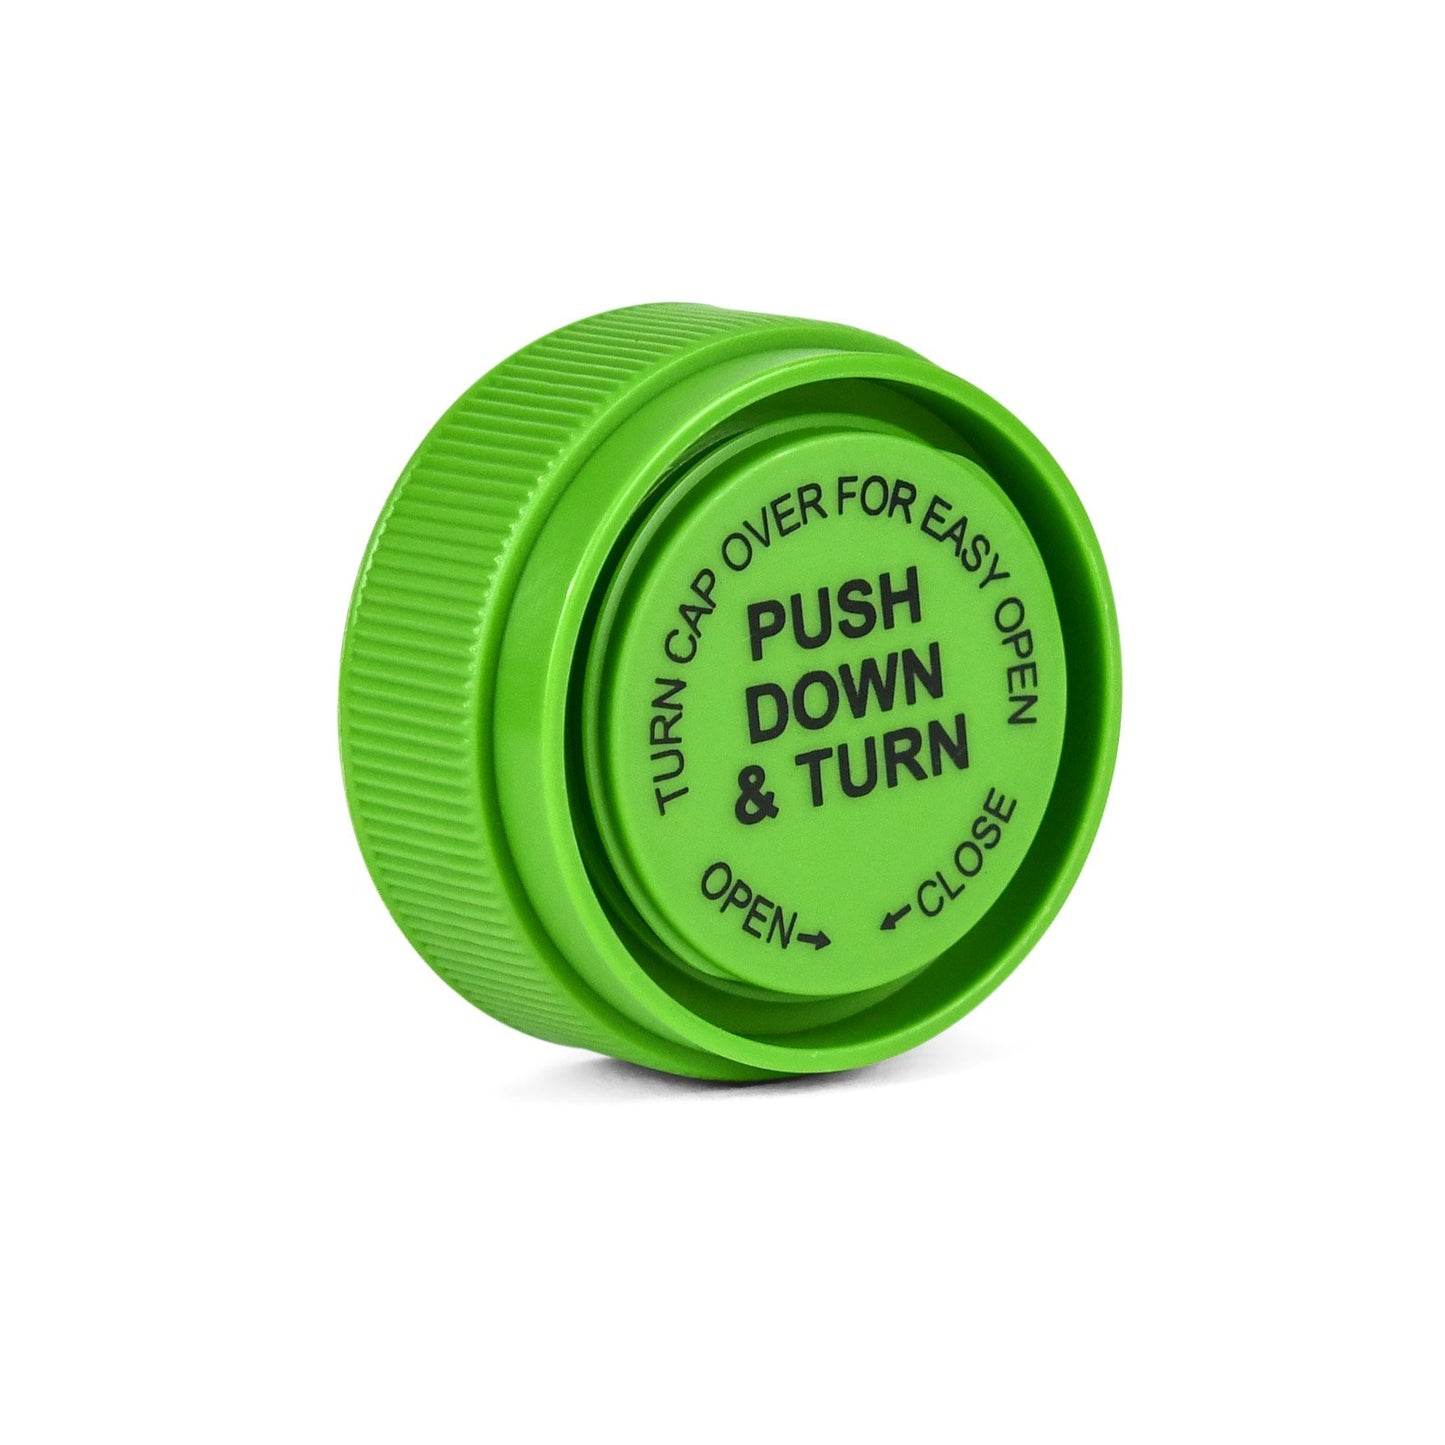 13 Dram Push Down & Turn Cap Opaque Green 275 COUNT